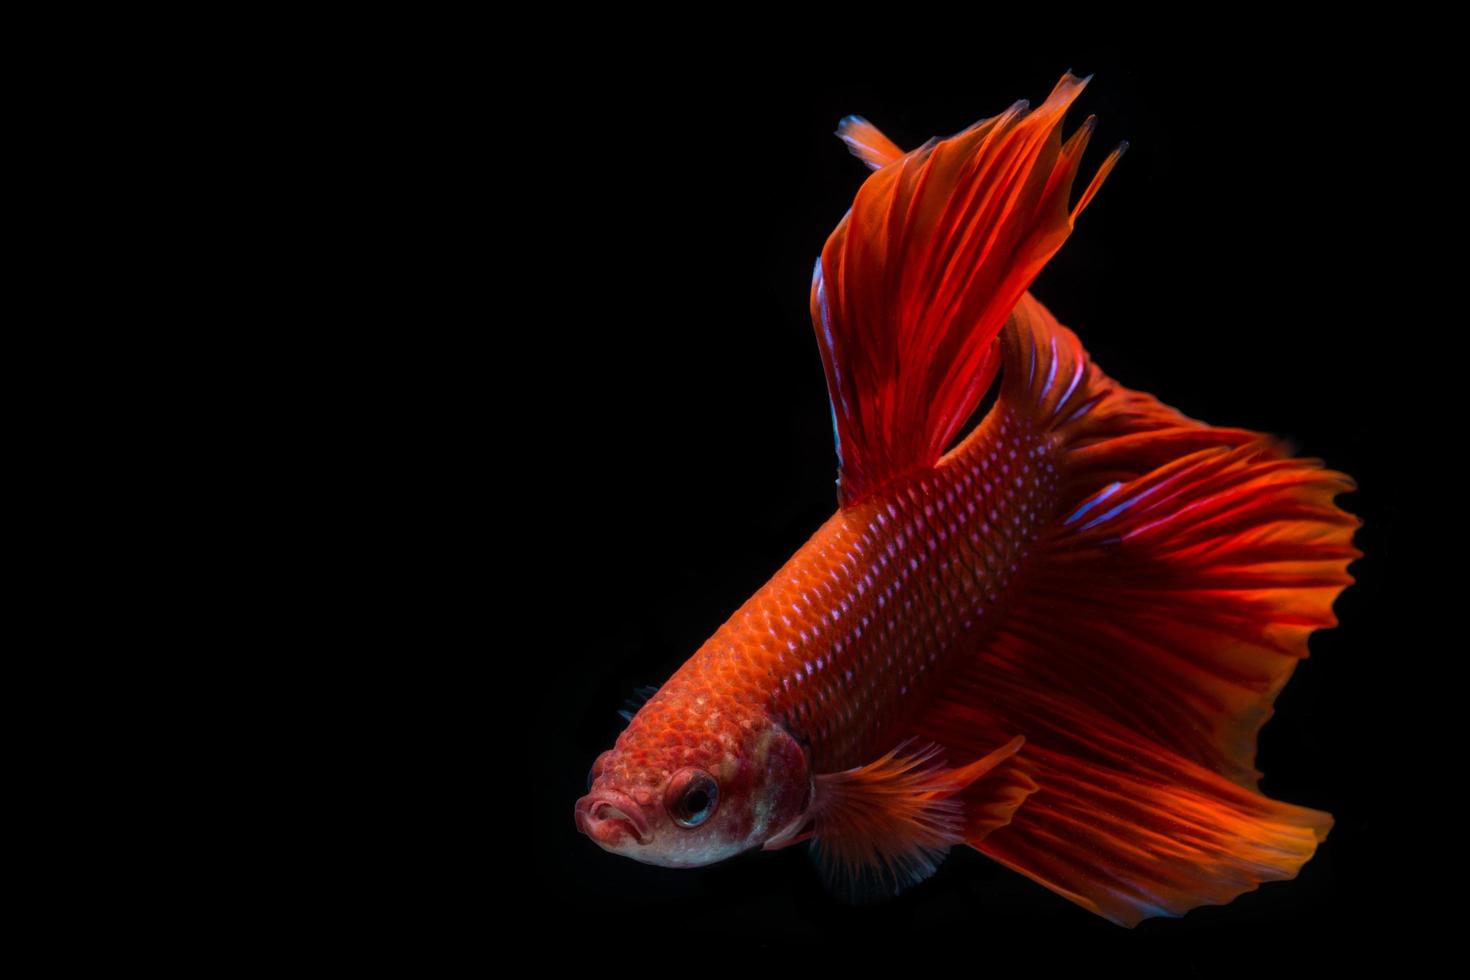 poisson betta rouge, poisson combattant siamois sur fond noirpoisson betta rouge, poisson combattant siamois sur fond noir photo